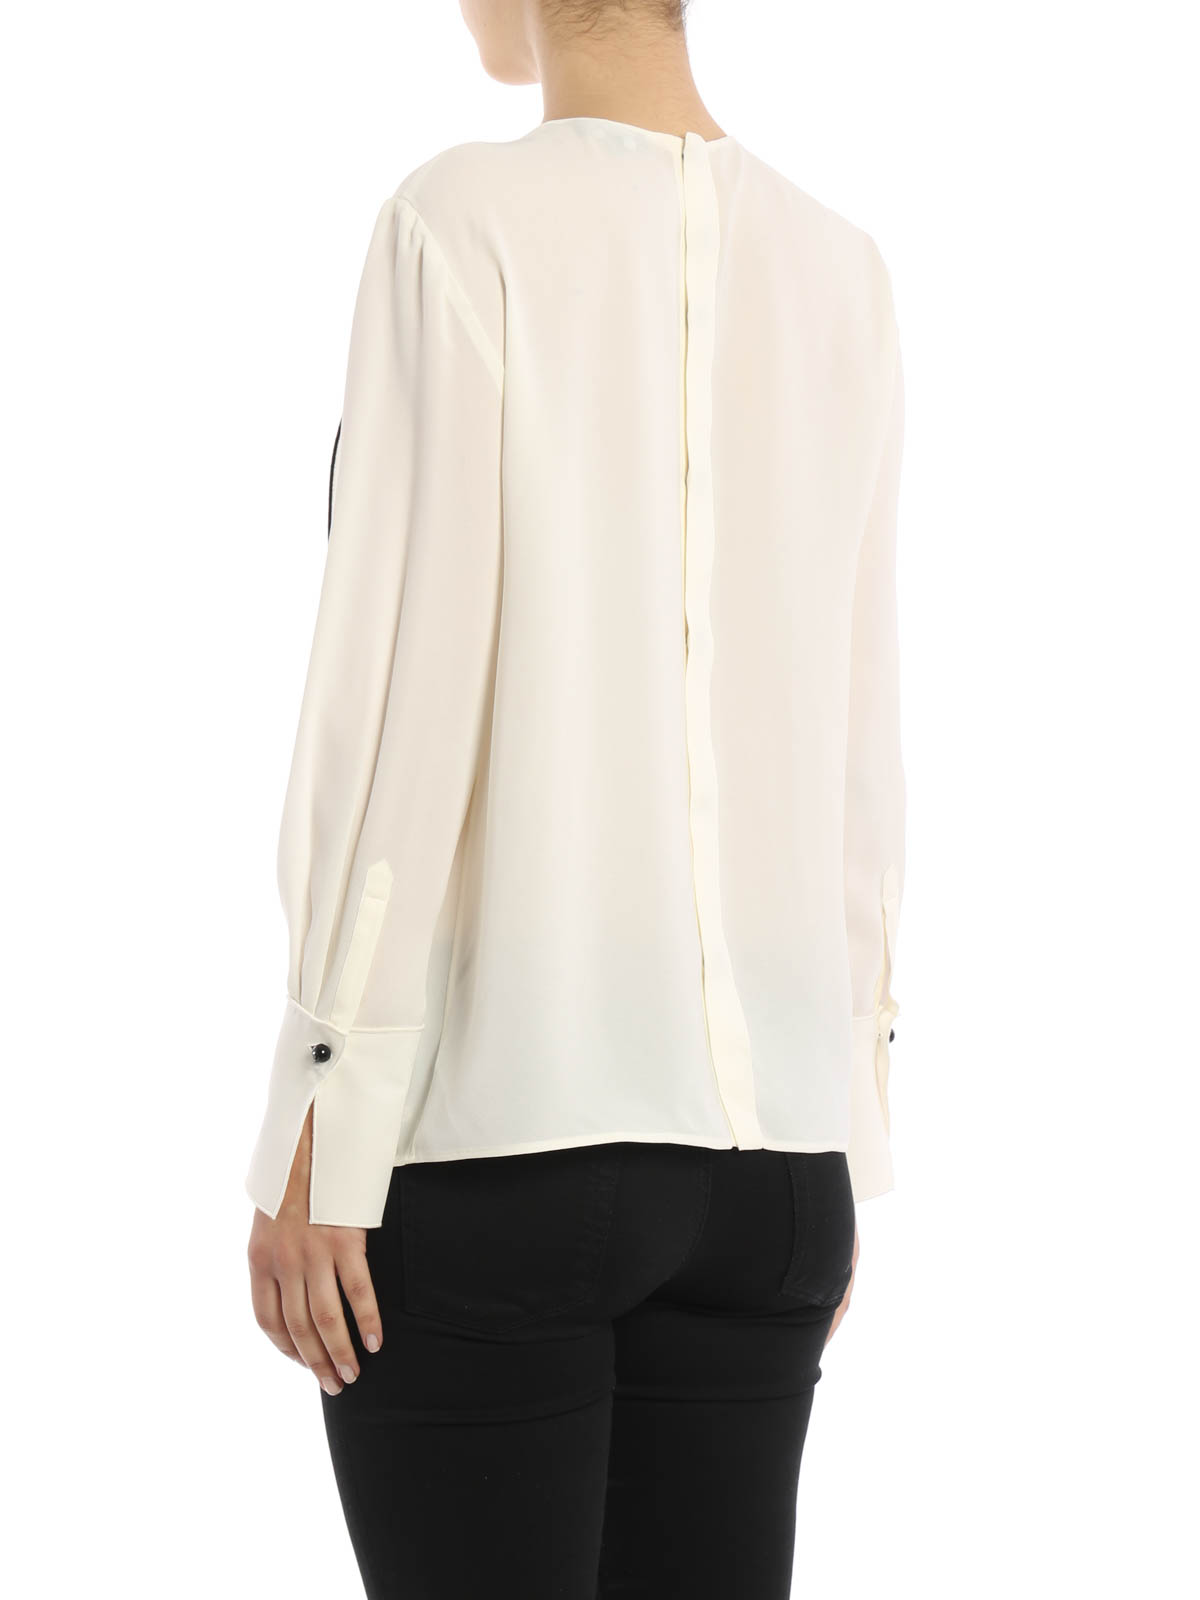 Blouses Giorgio Armani - Silk chiffon blouse - VAC20TVA68C101 | iKRIX.com